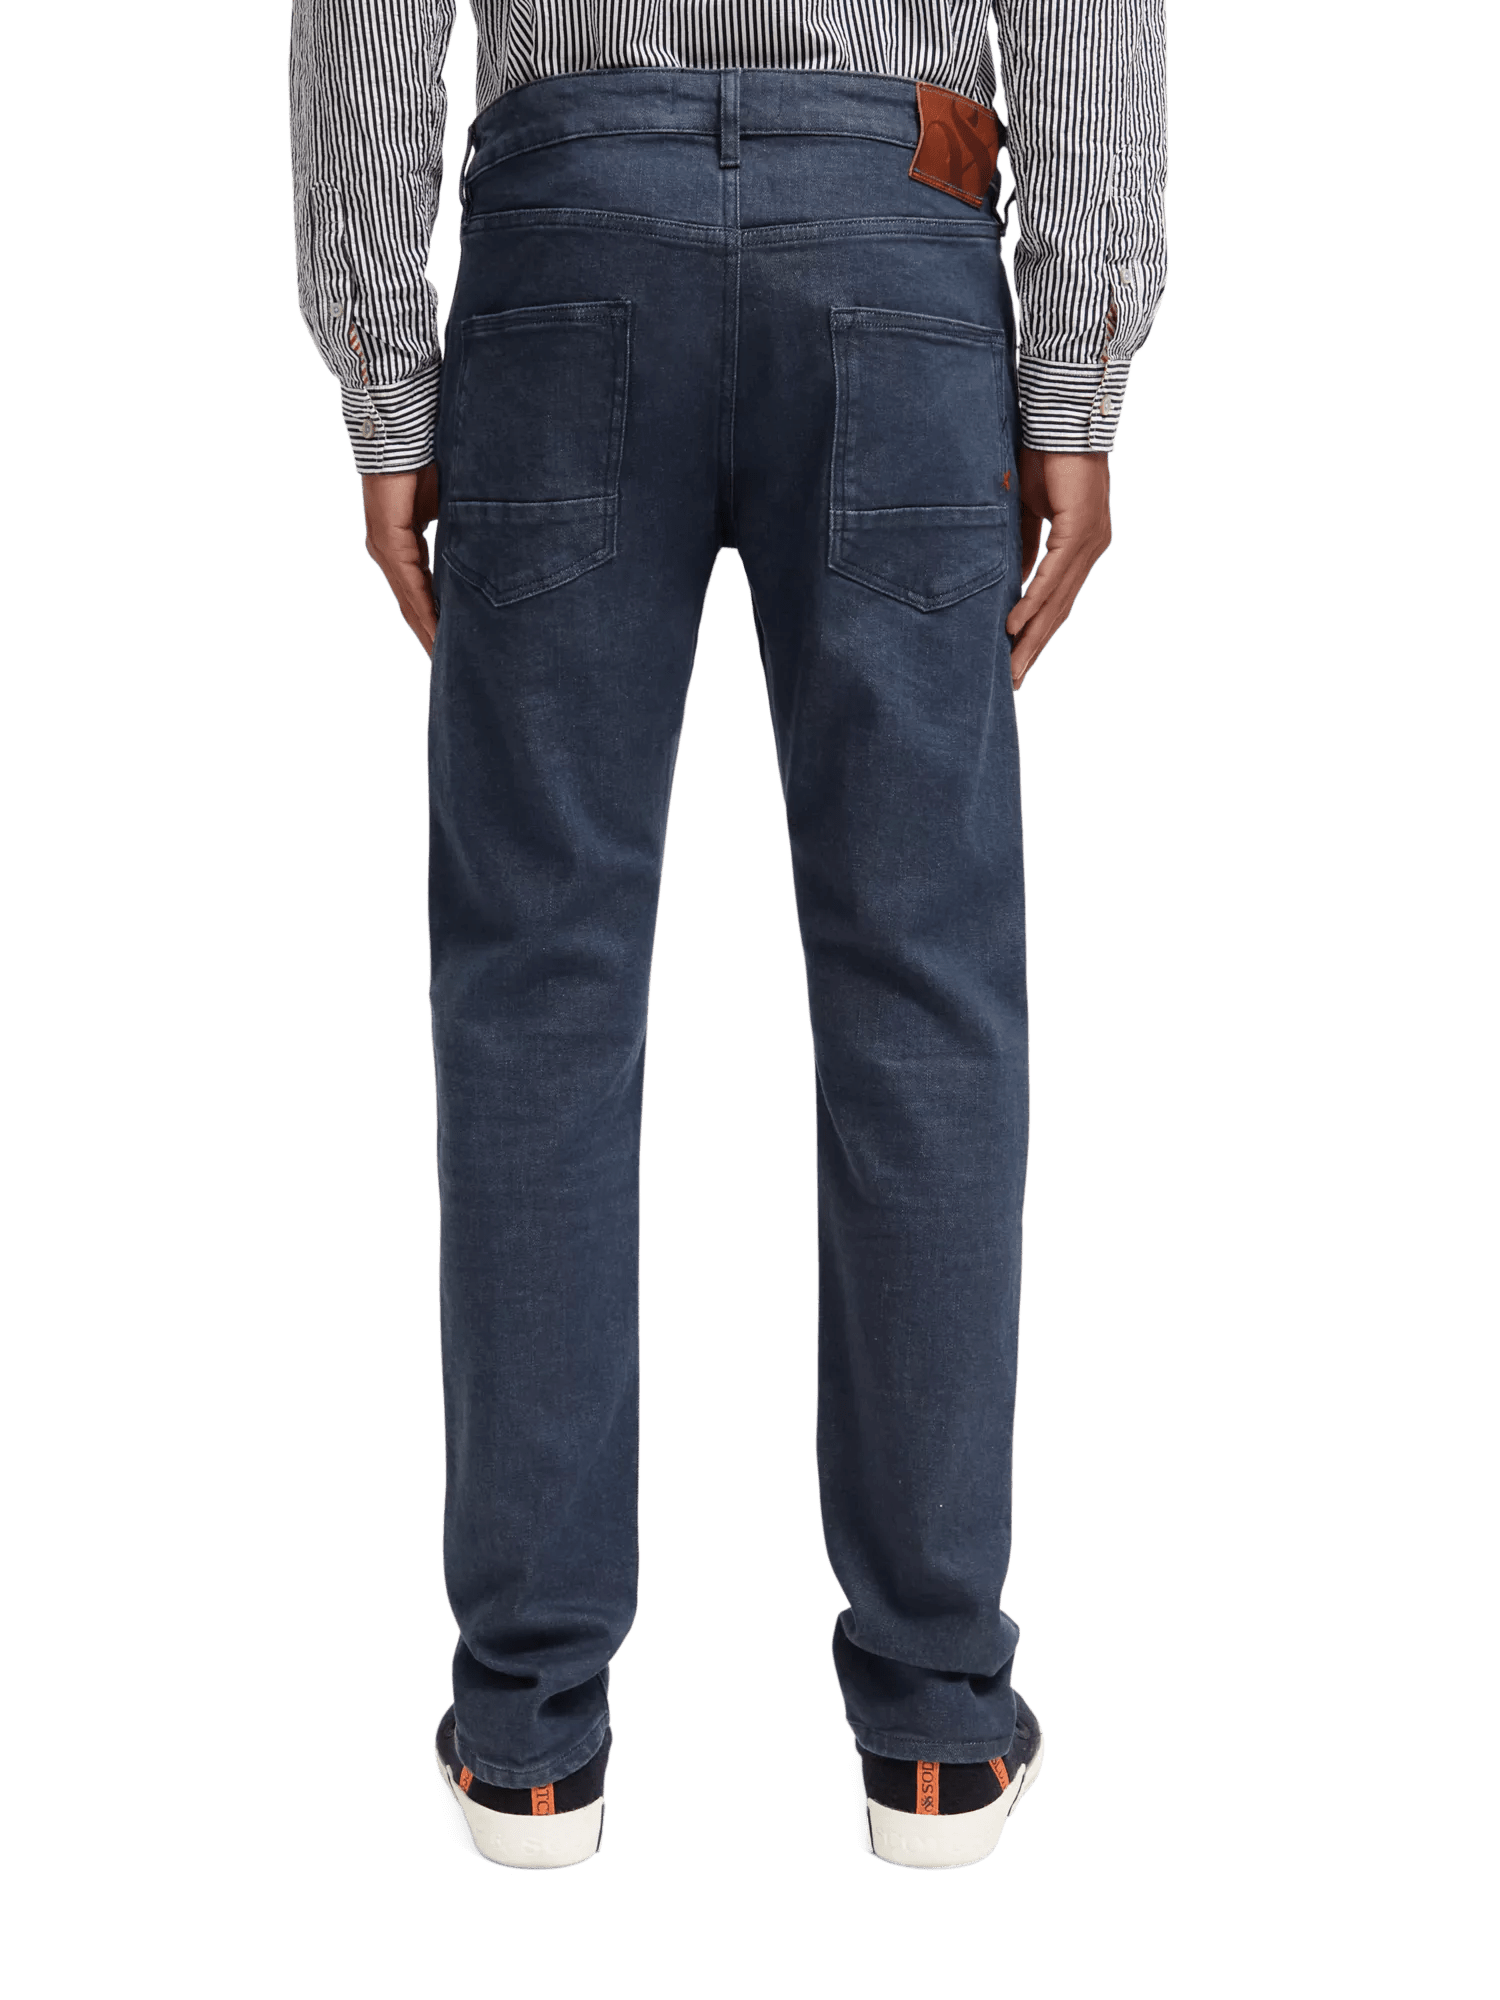 Scotch & Soda Ralston regular slim jeans  – Blauw Burn MDL-BCK